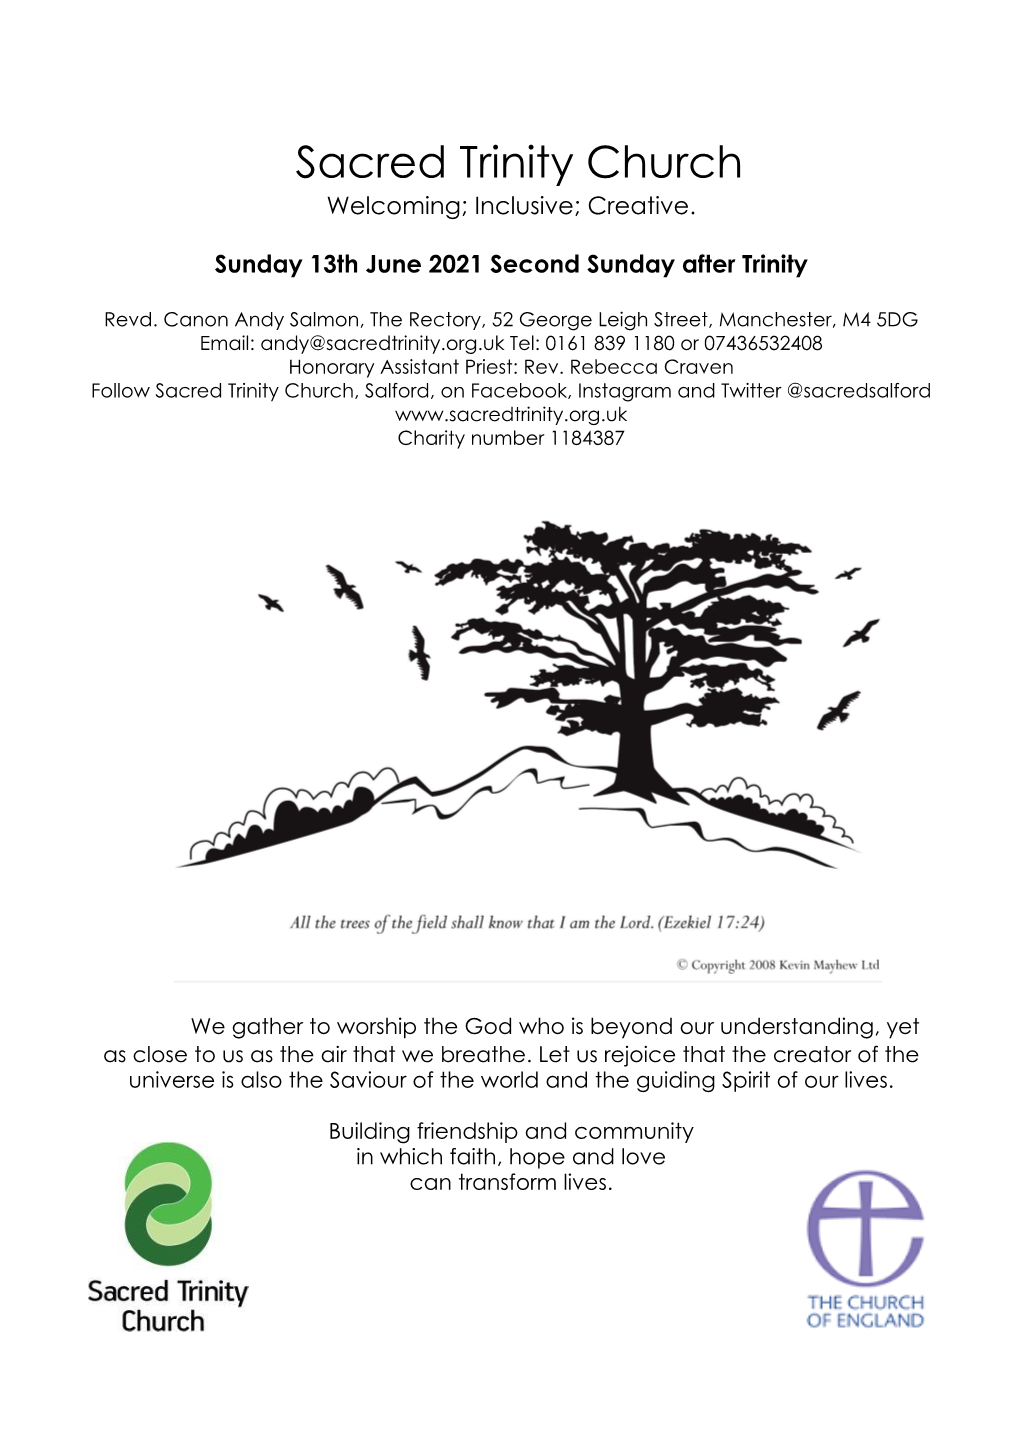 Sunday 13Th June 2021 Second Sunday After Trinity